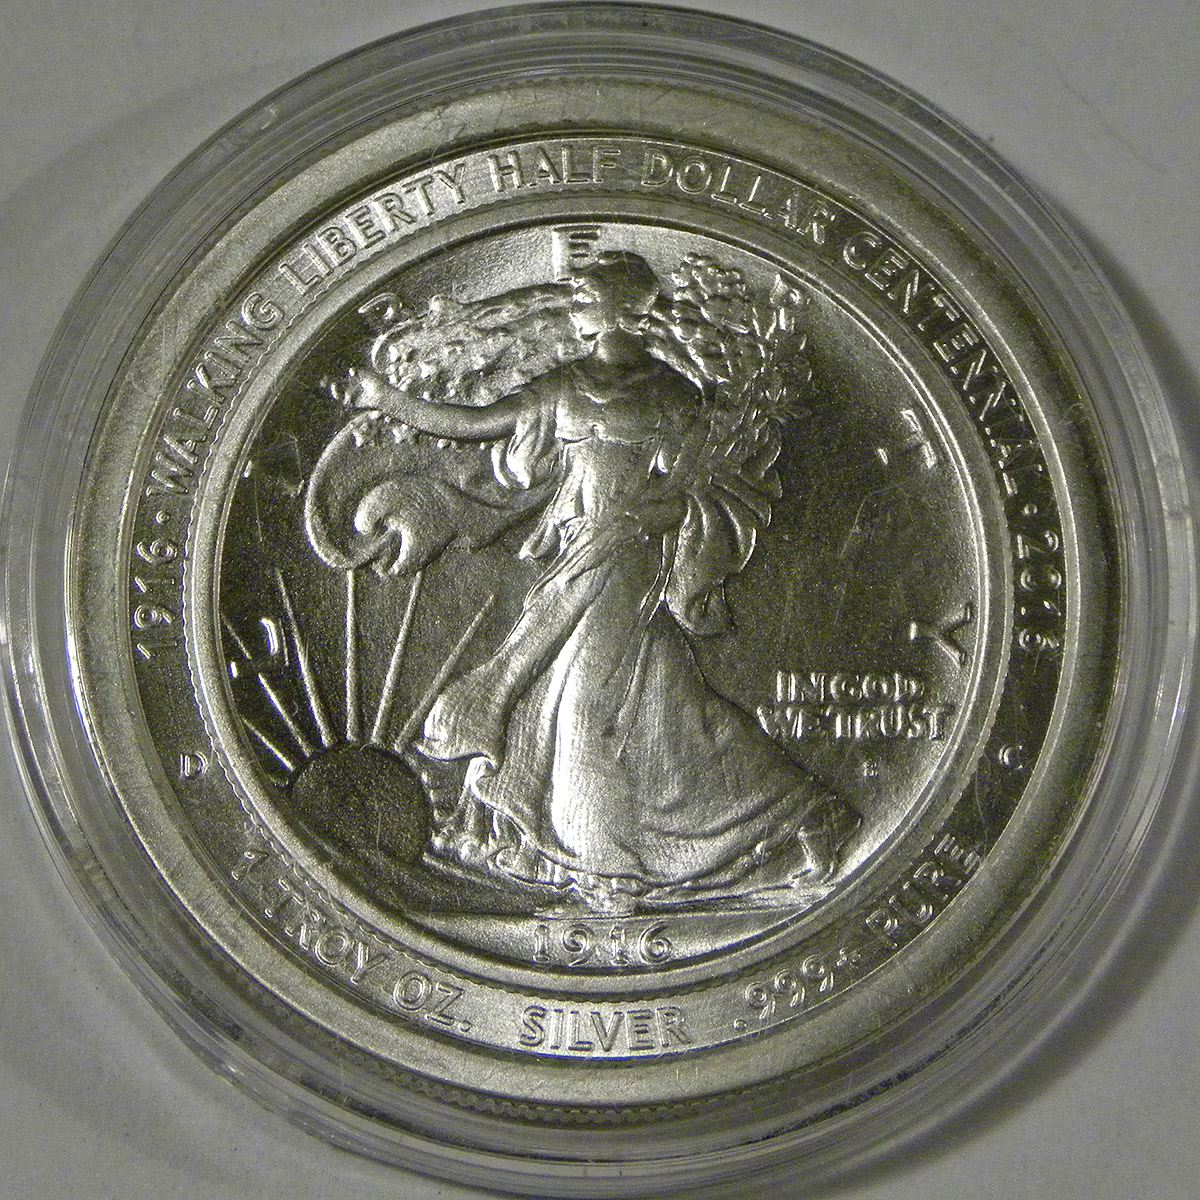 Walking Liberty Half Dollar Centennial silver round (obverse)